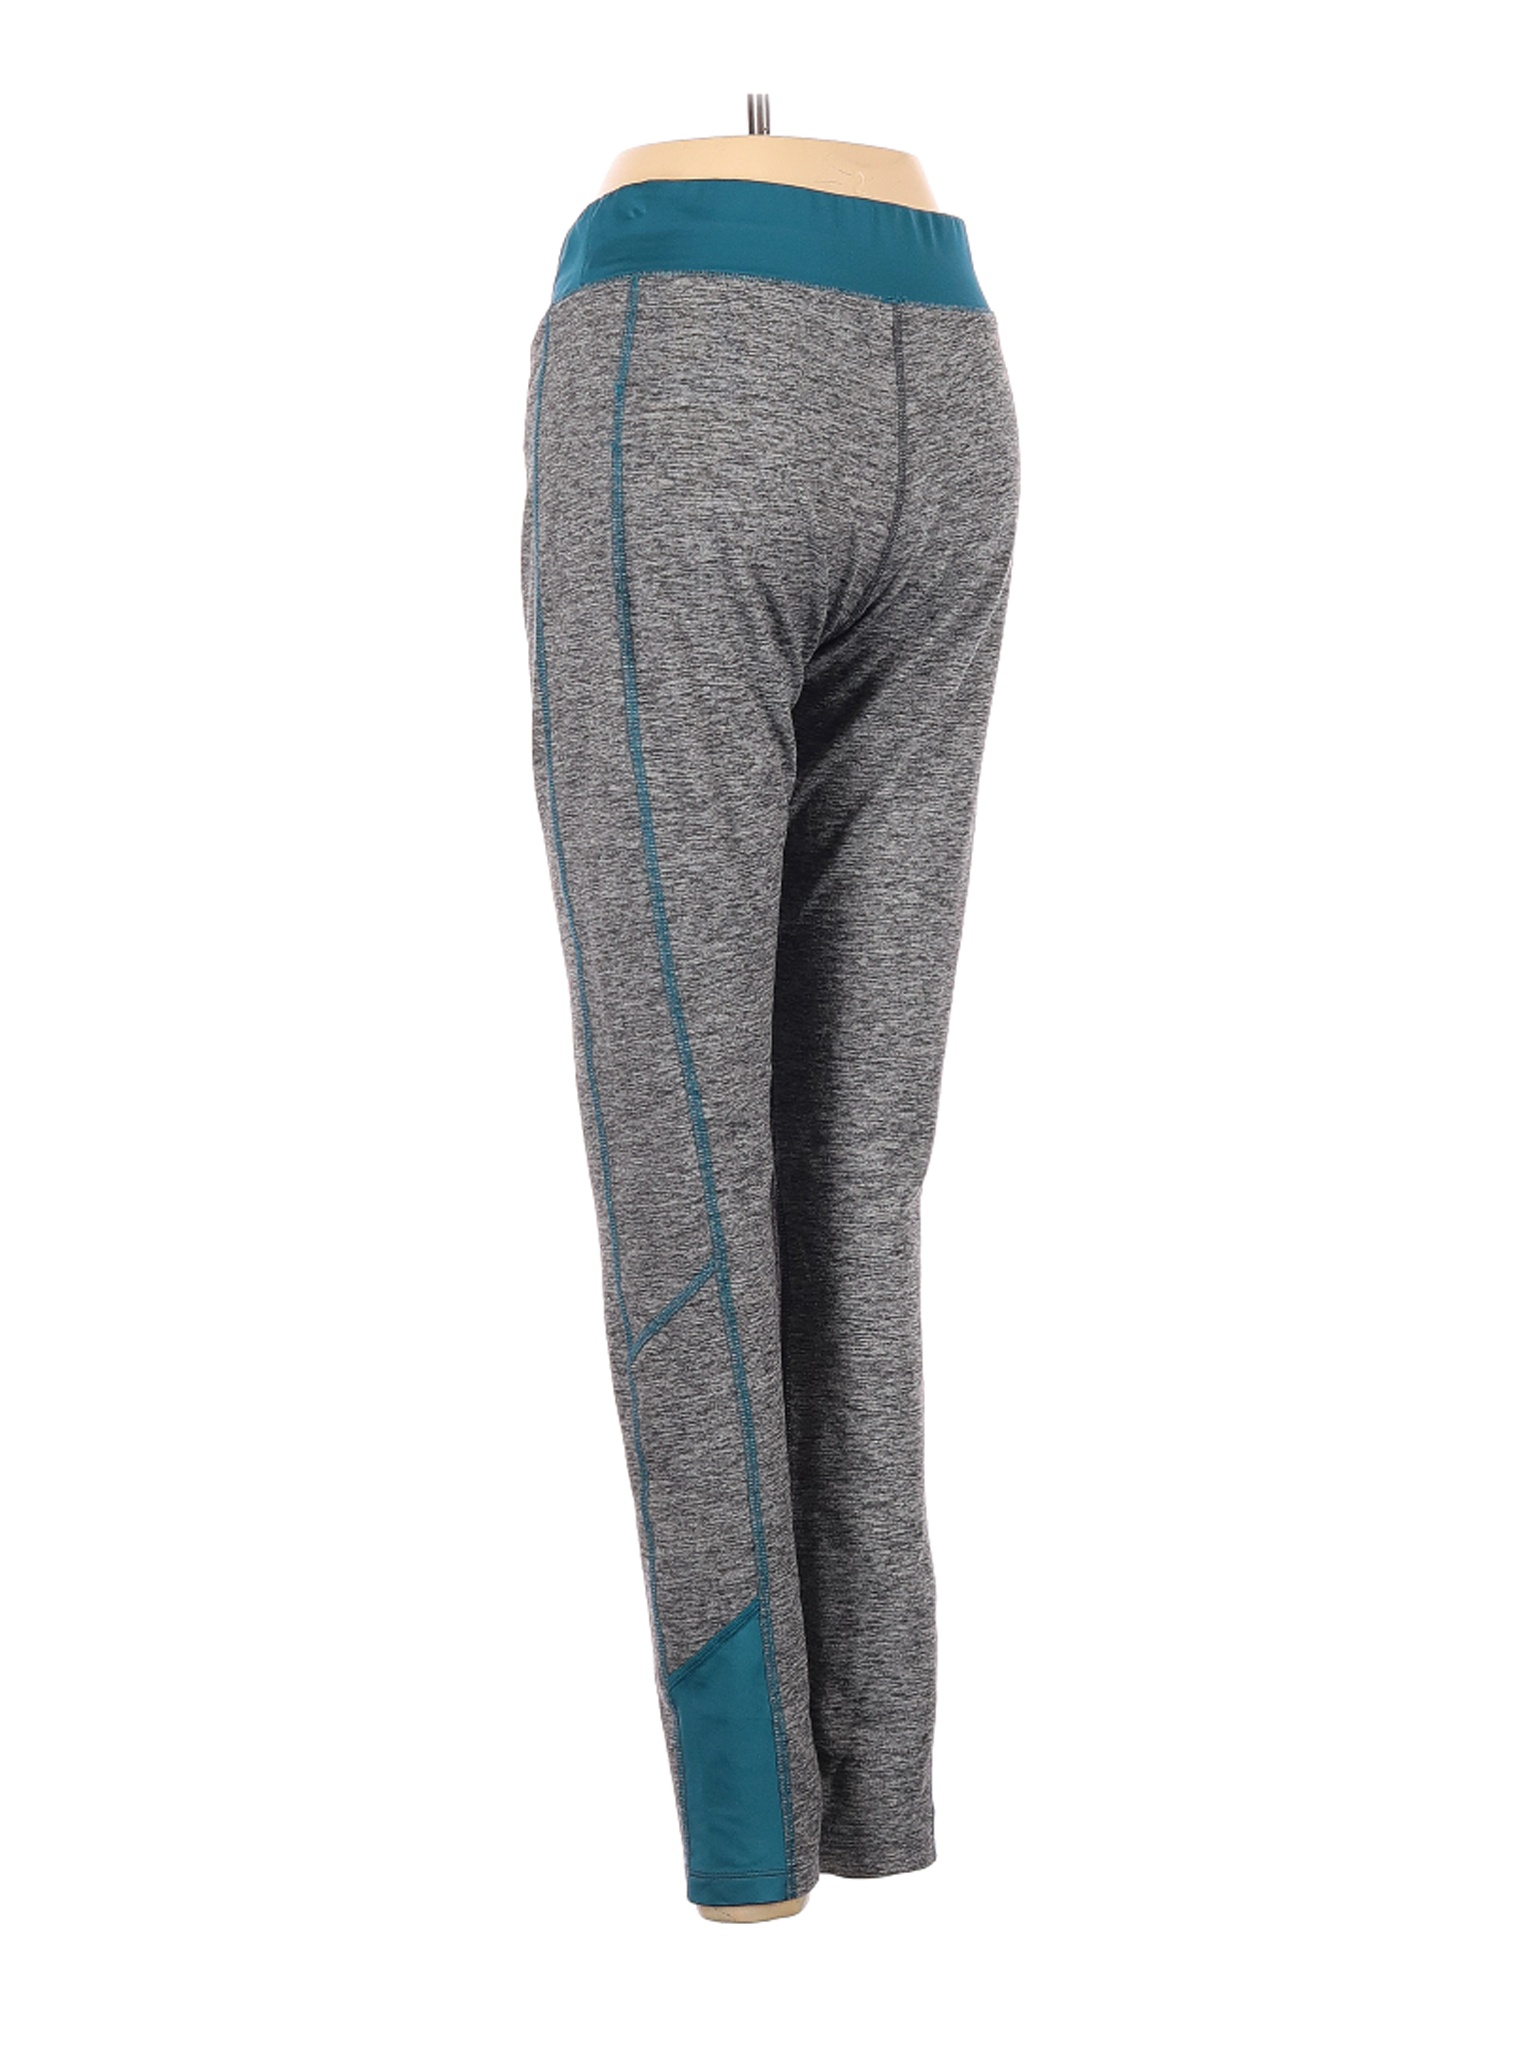 Bcg Women Gray Active Pants S | eBay